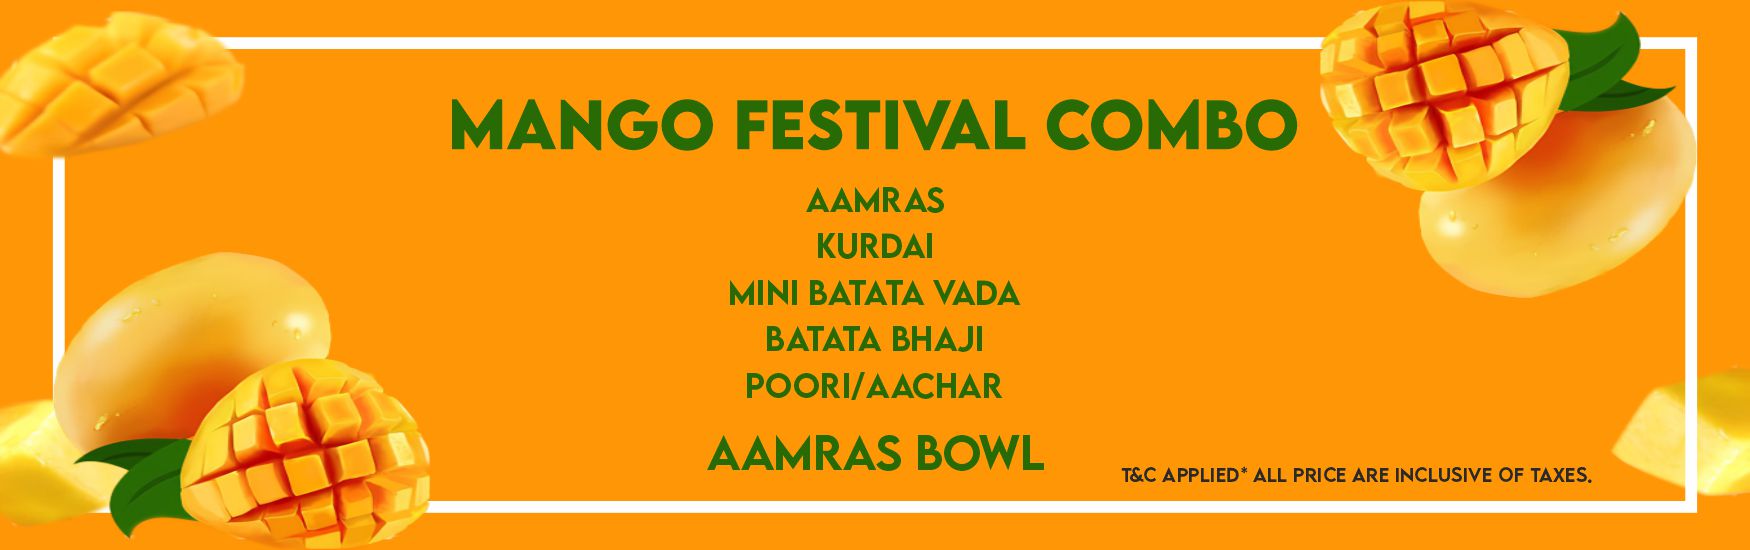 Mango festival Combo - Summer specialized fruit & Food is mango & Aamras resply.